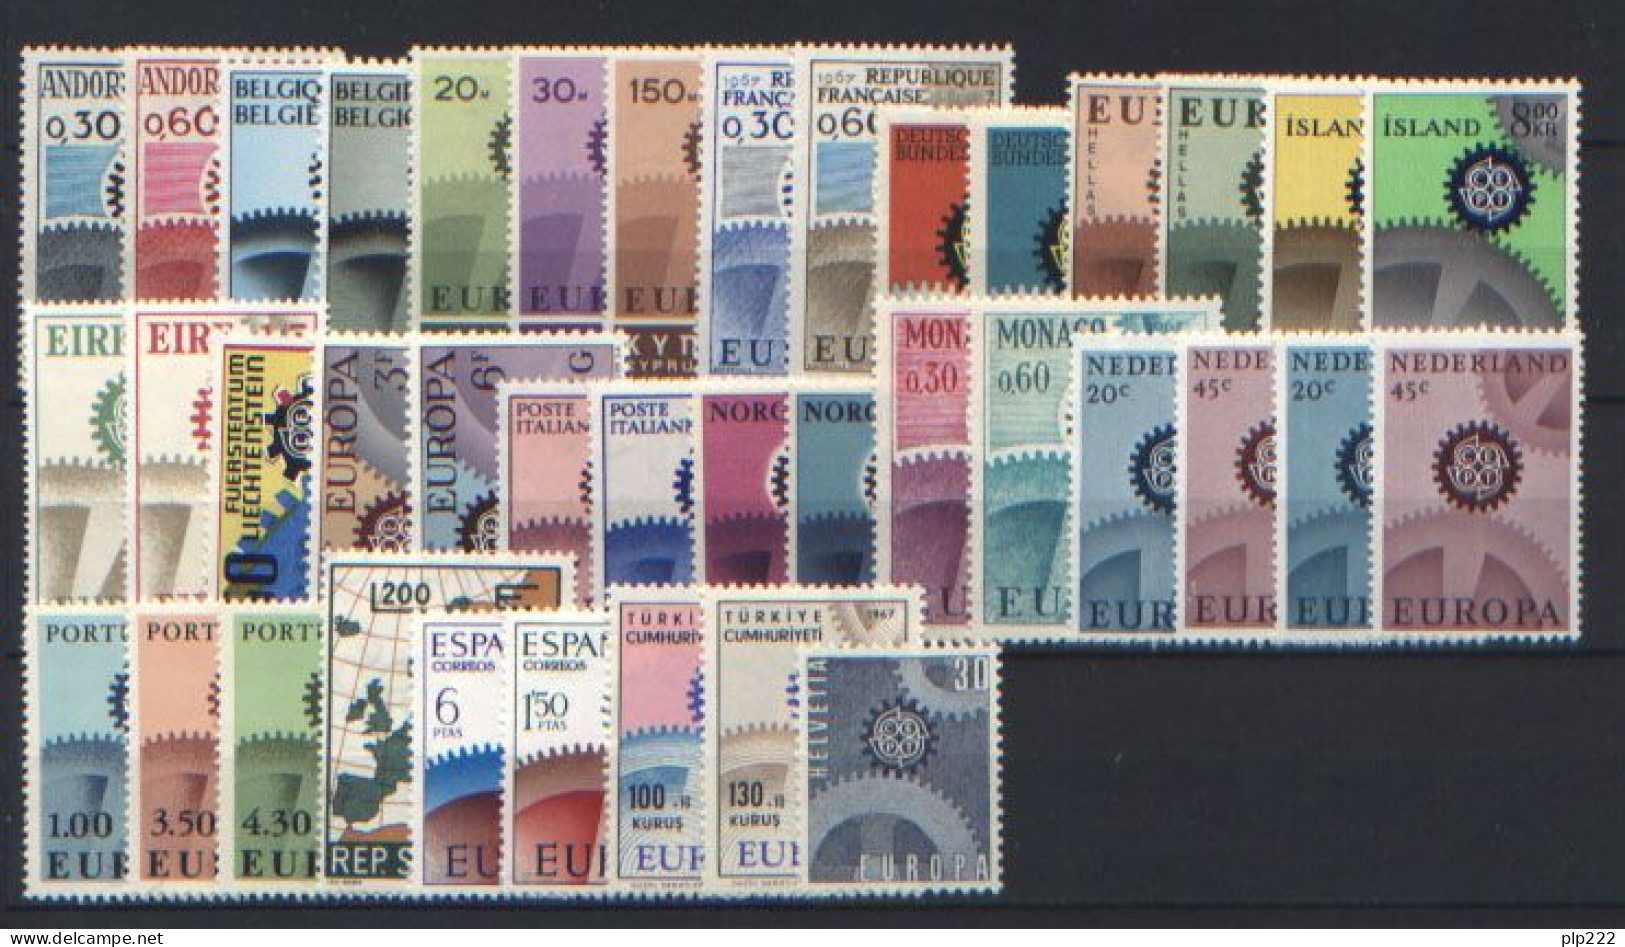 Europa CEPT 1967 Annata Completa + Foglietto / Complete Year Set + S/S **/MNH VF - Volledig Jaar